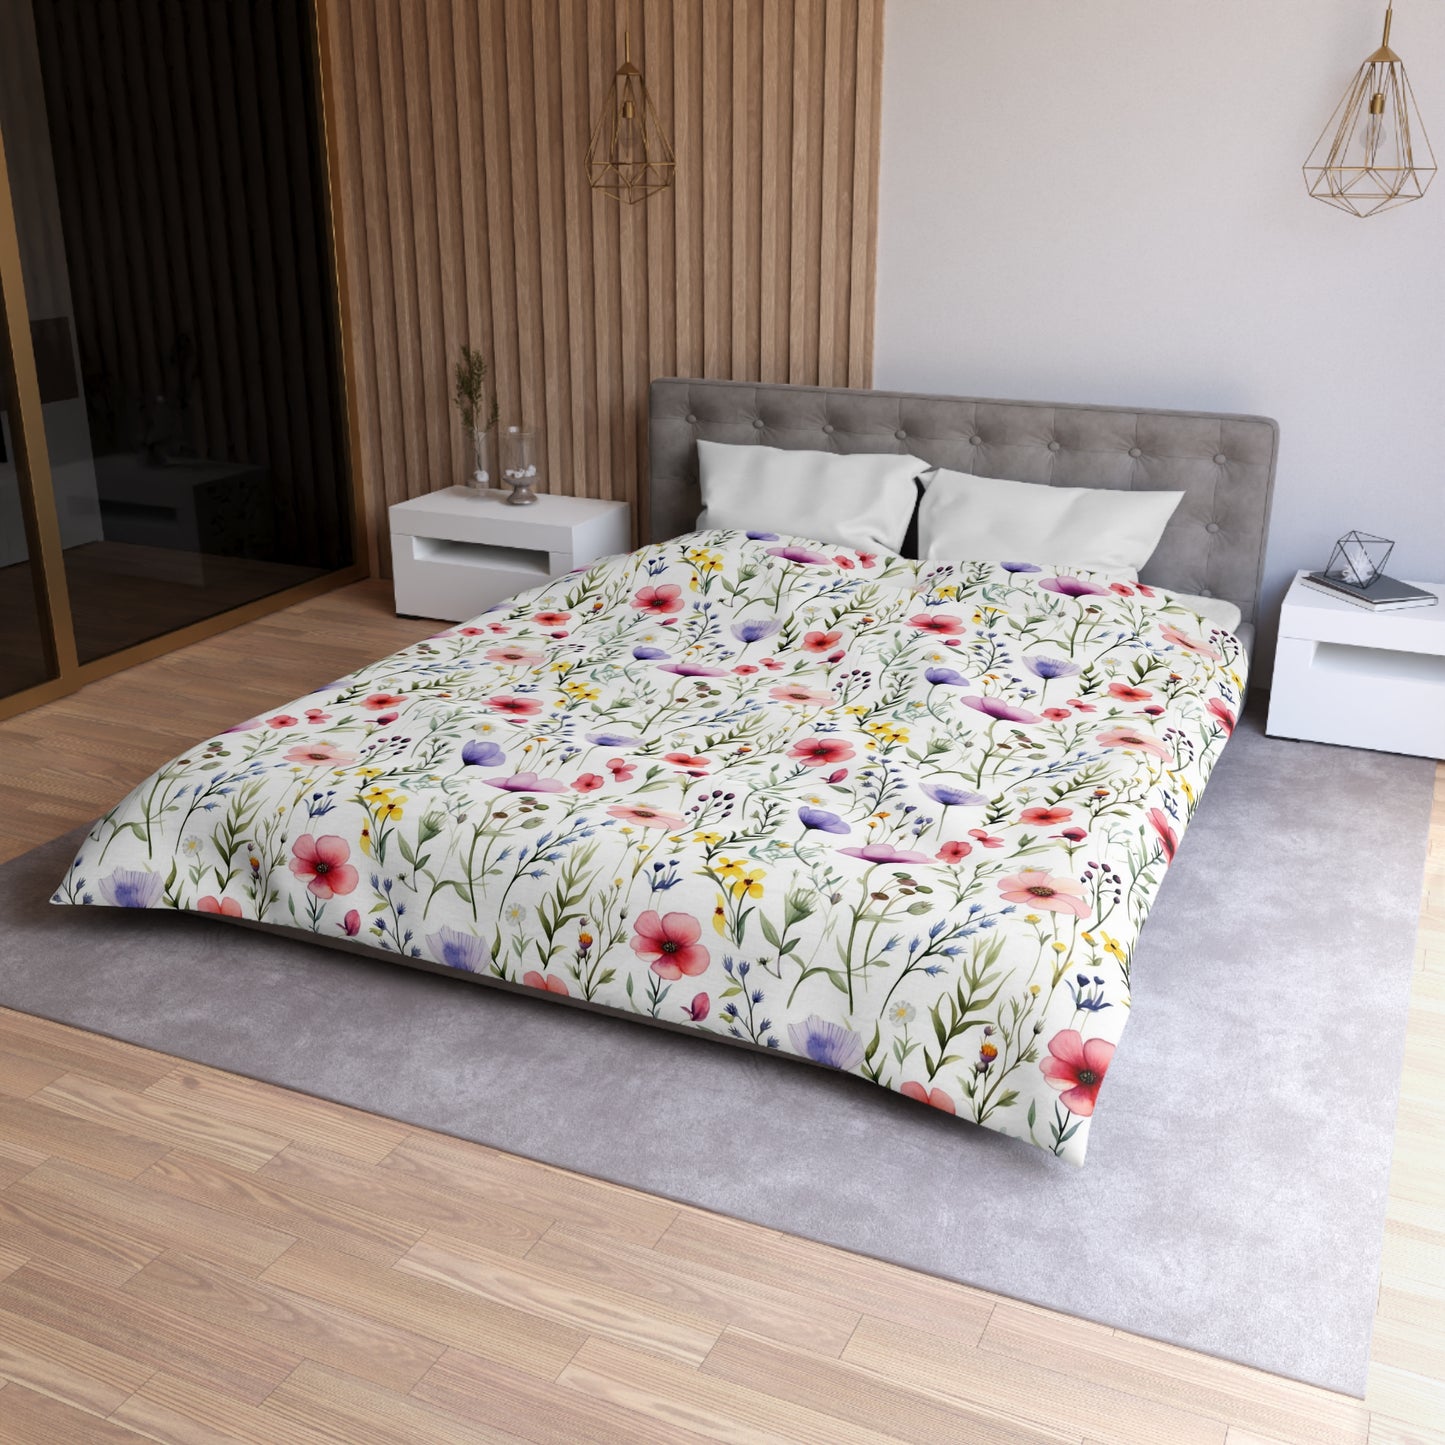 Wildflowers Duvet Cover, Floral Watercolor Bedding Queen King Full Twin XL Microfiber Unique Designer Bed Quilt Bedroom Decor